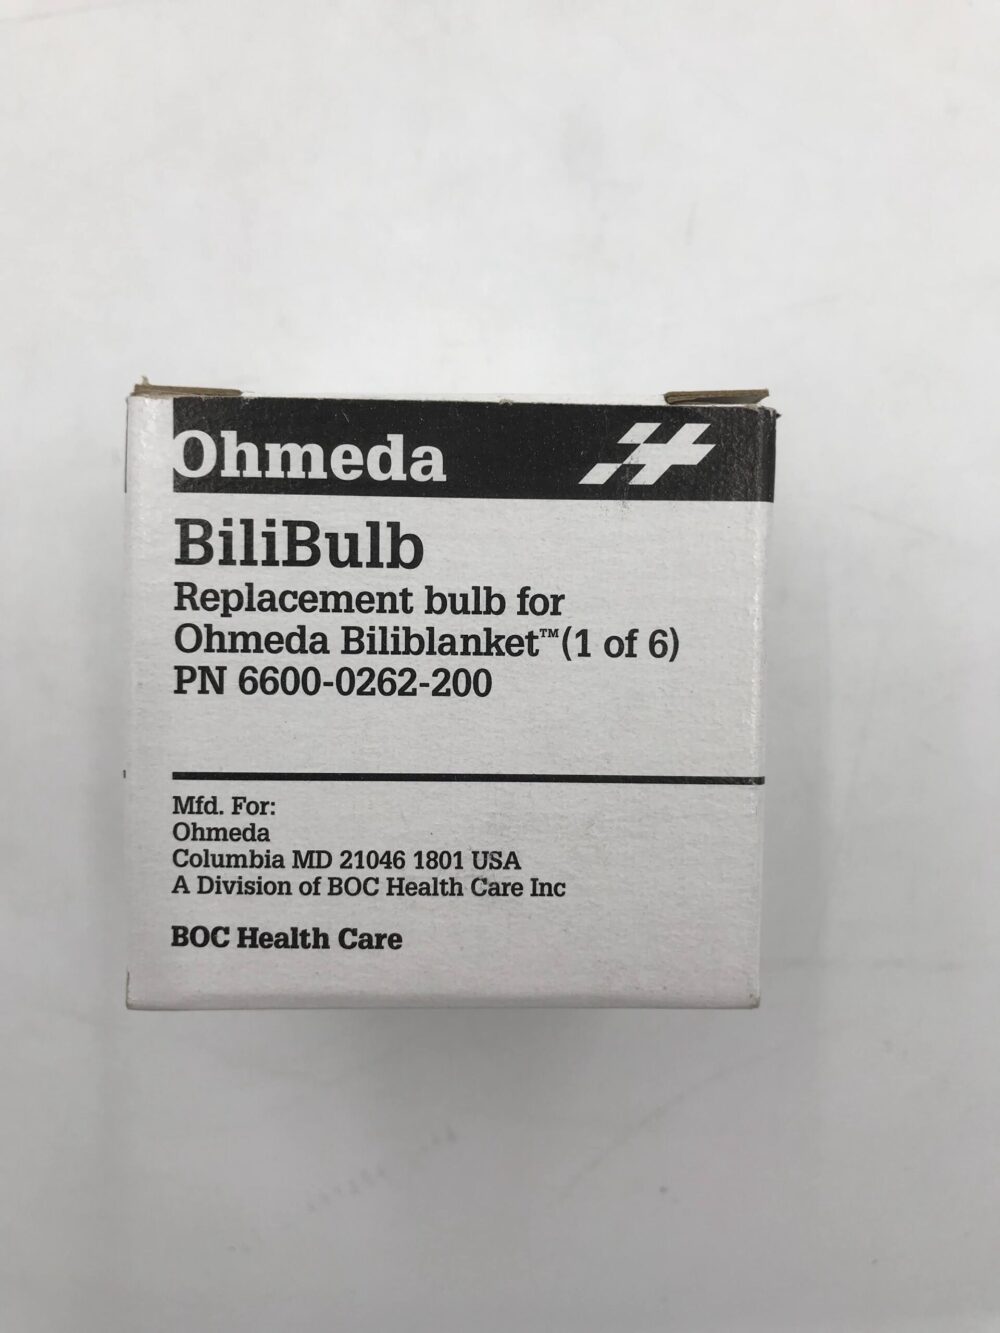 Ohmeda 6600-0262-200 BiliBulb Replacement Bulb for Ohmeda Biliblanket